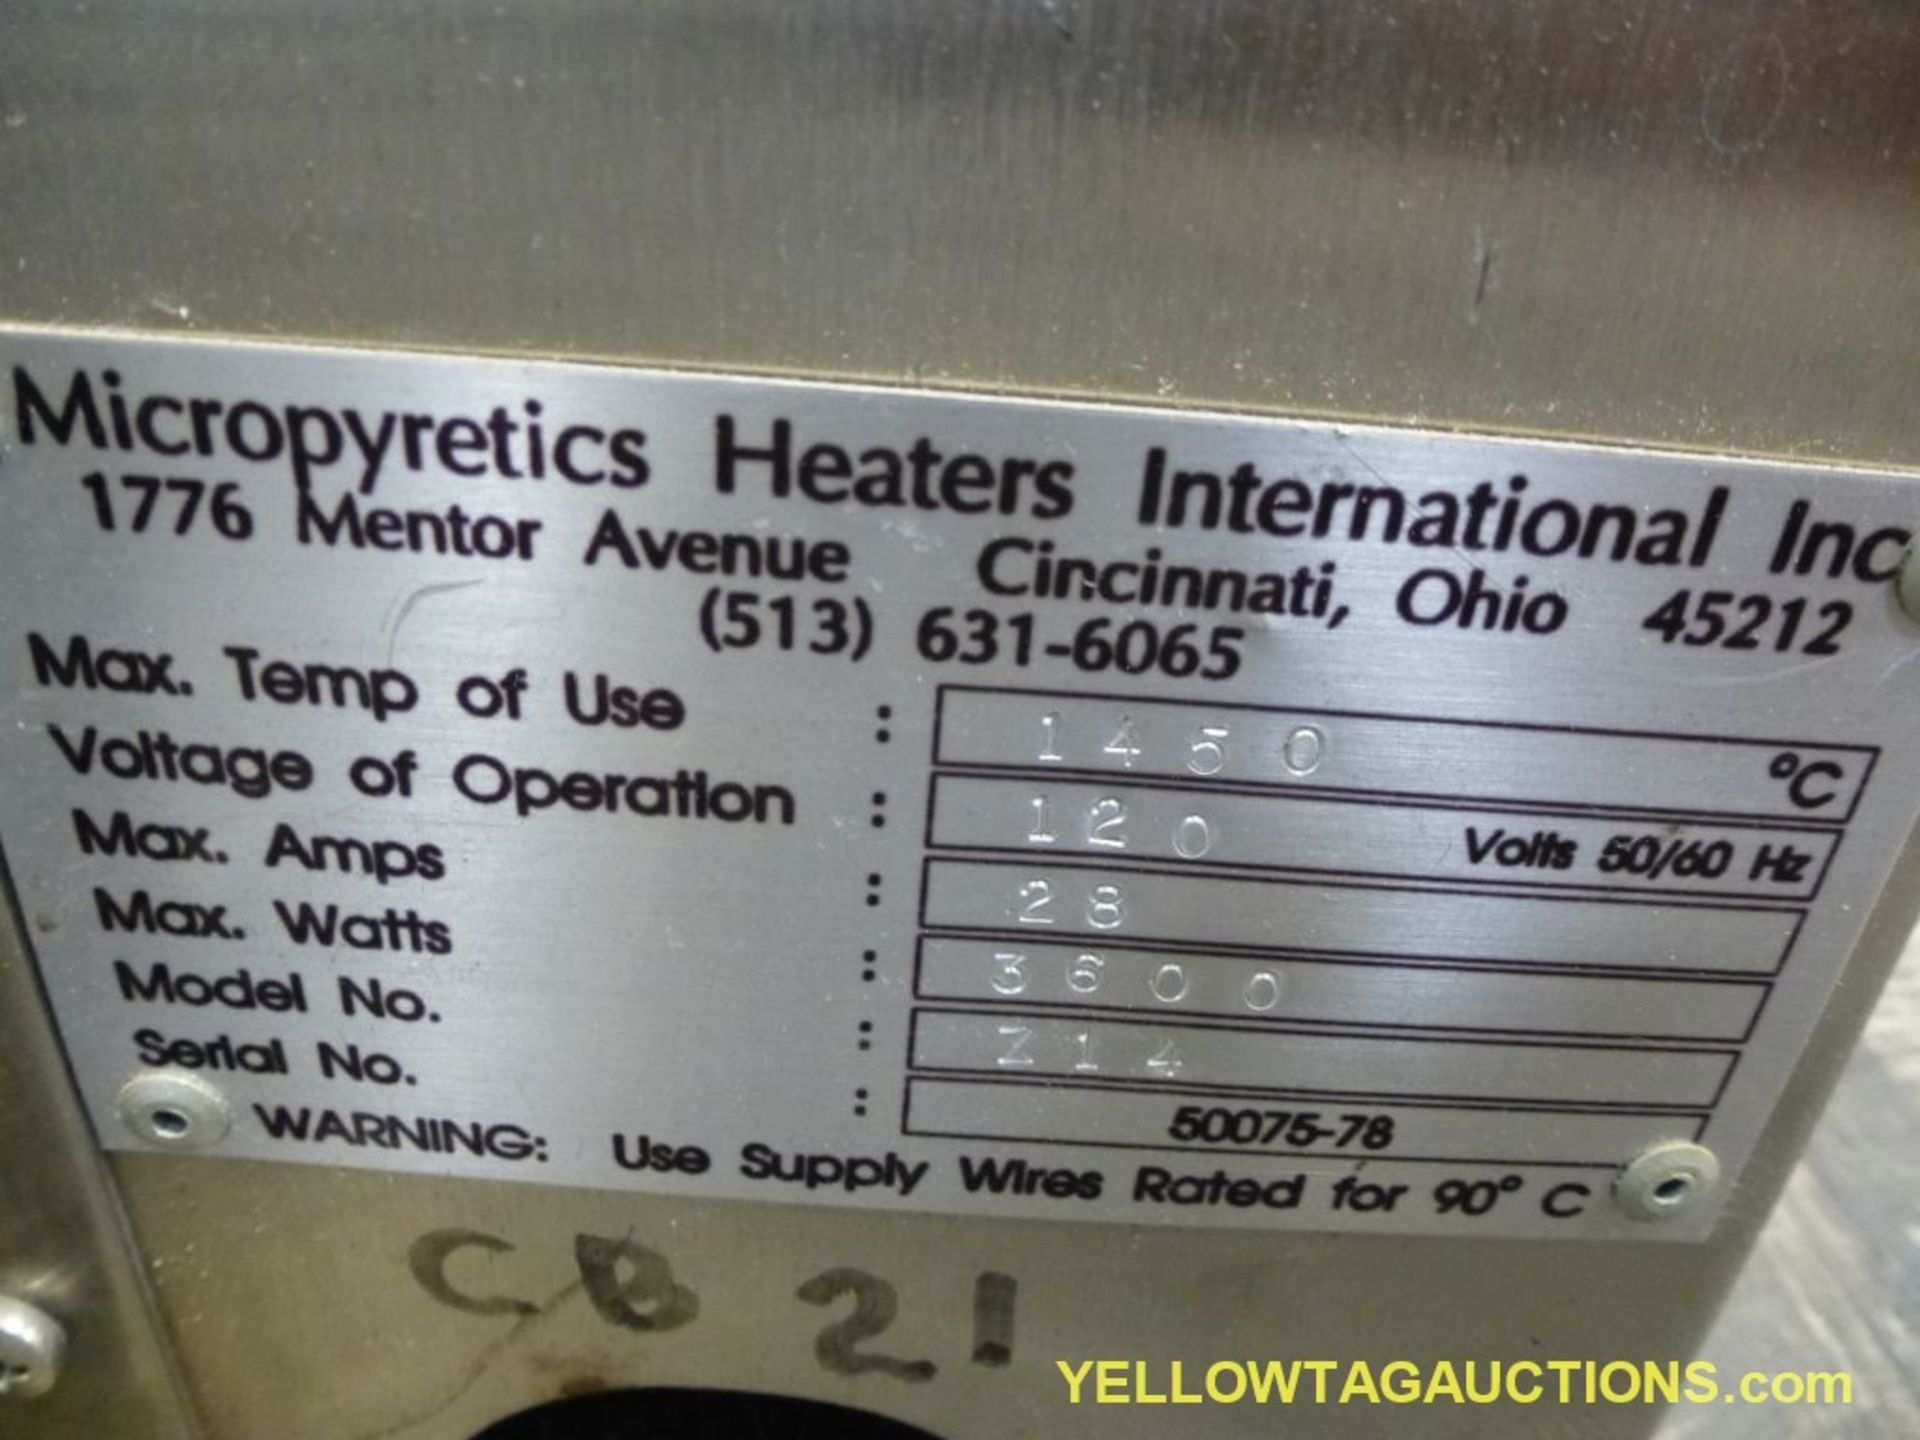 Micropyretics Heater|Model No. 214Max Temp: 1,450 Deg. CLocation: YTA Warehouse - Image 4 of 4